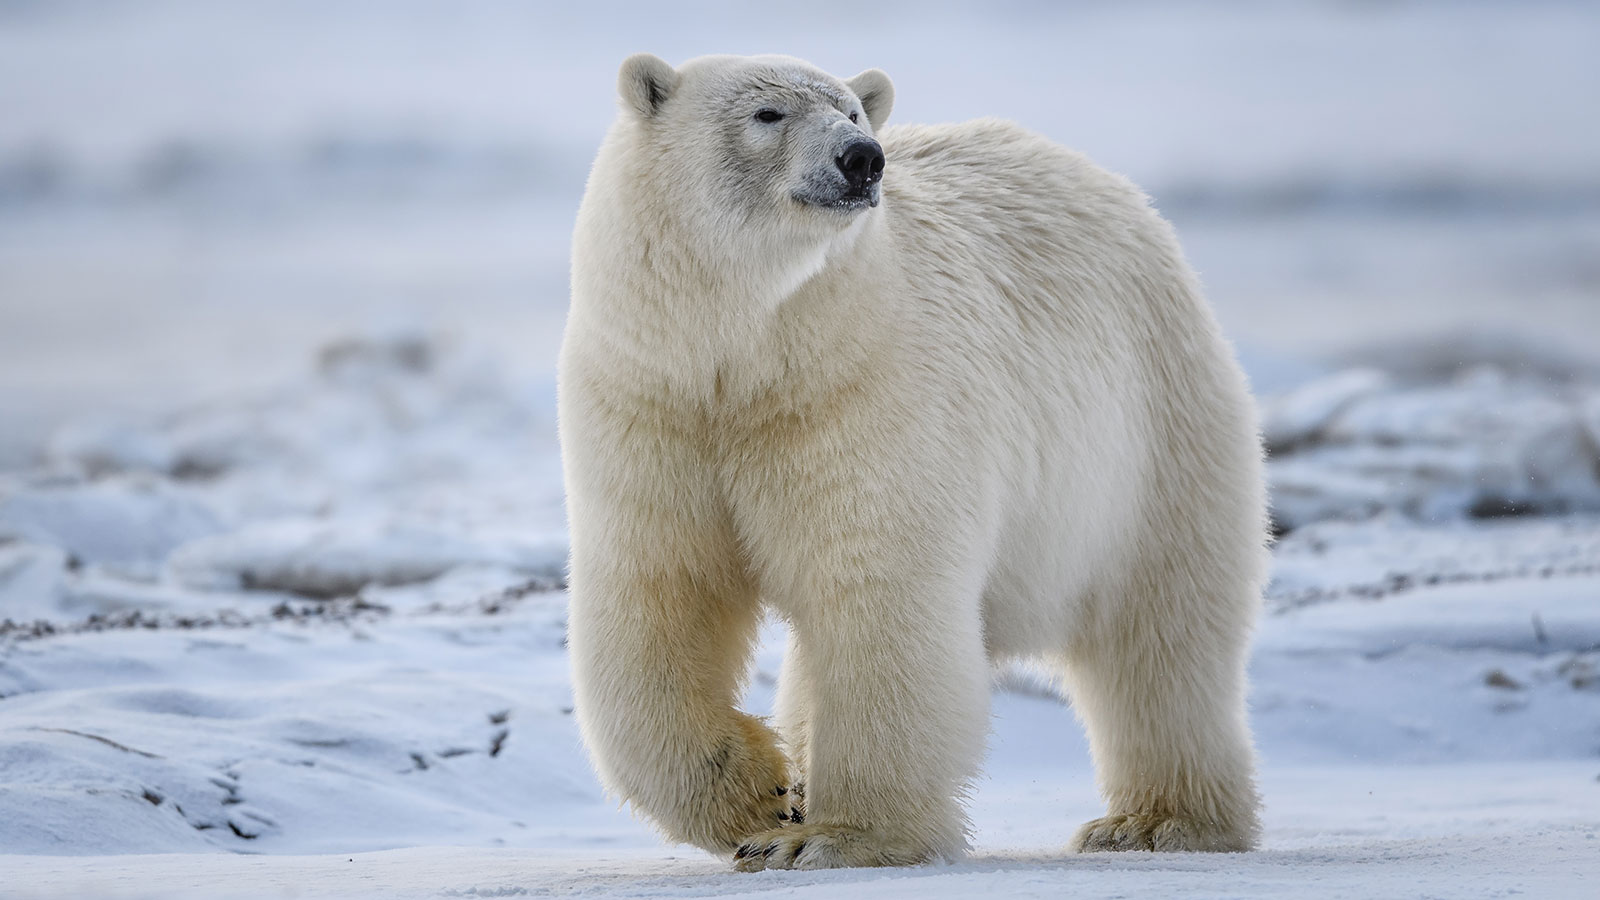 kutup ayısı